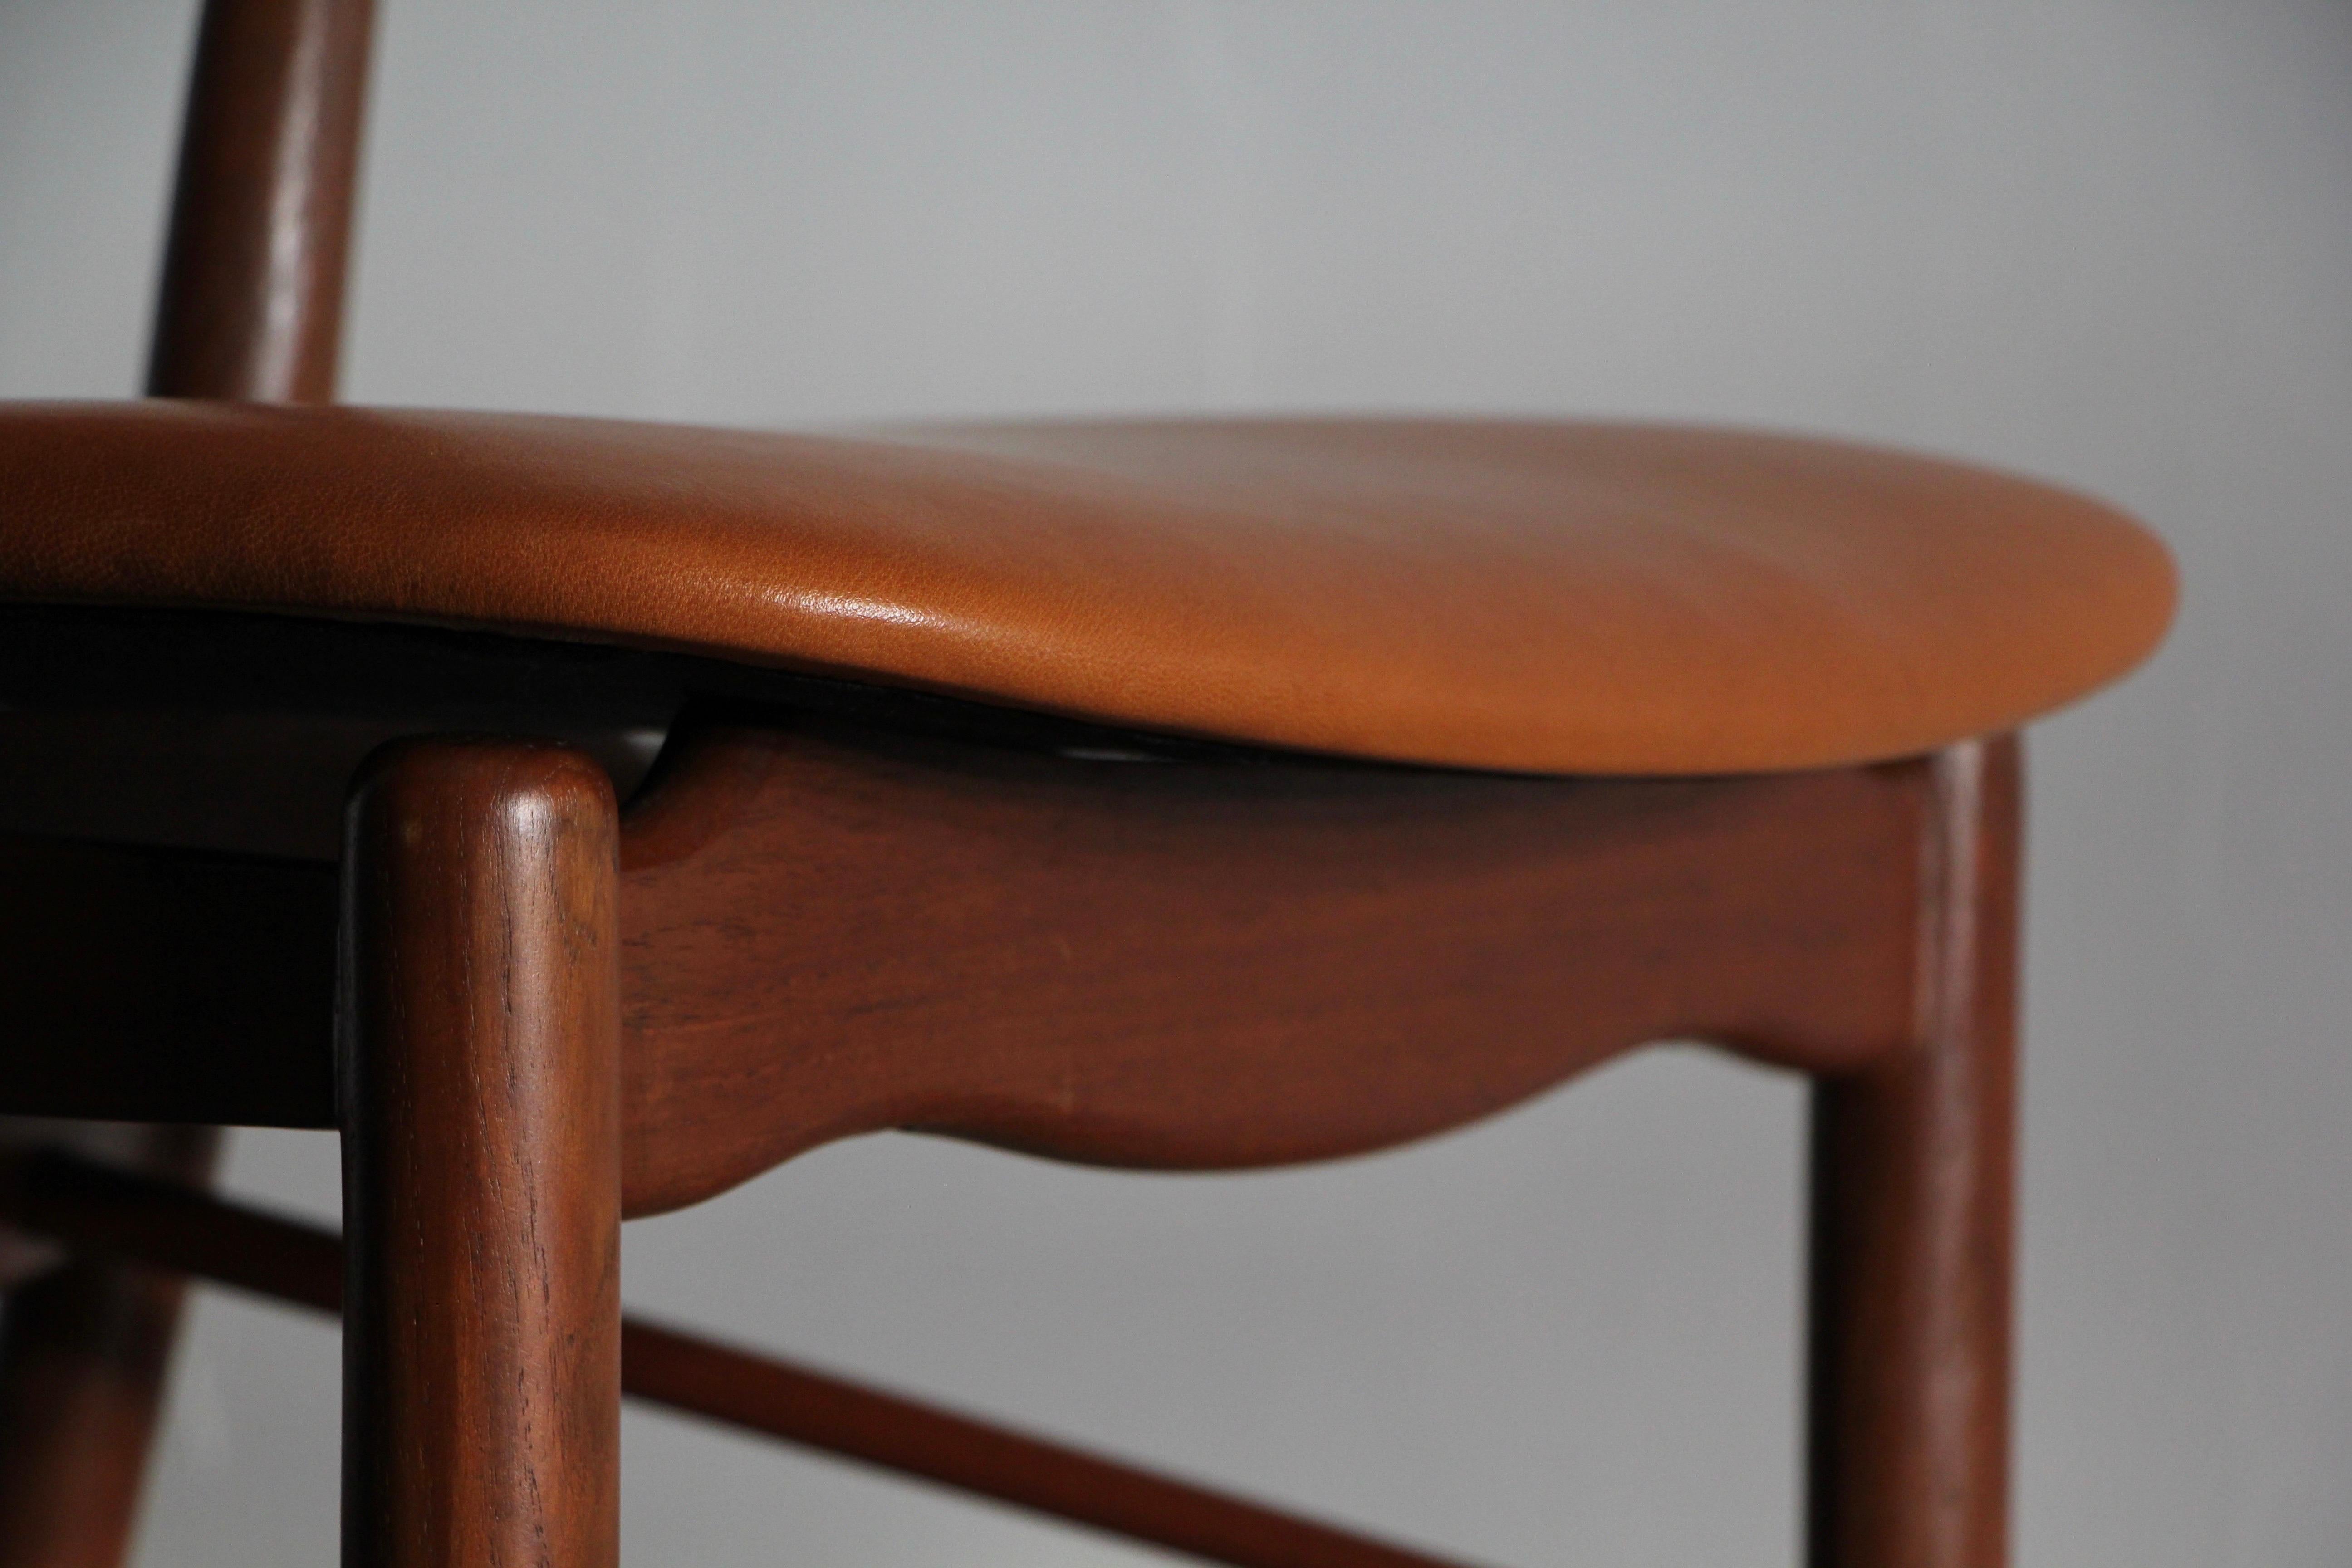 Finn Juhl “BO 63” Sculpted Teak Dining Chairs in Cognac Goatskin Leather, 1950s For Sale 2